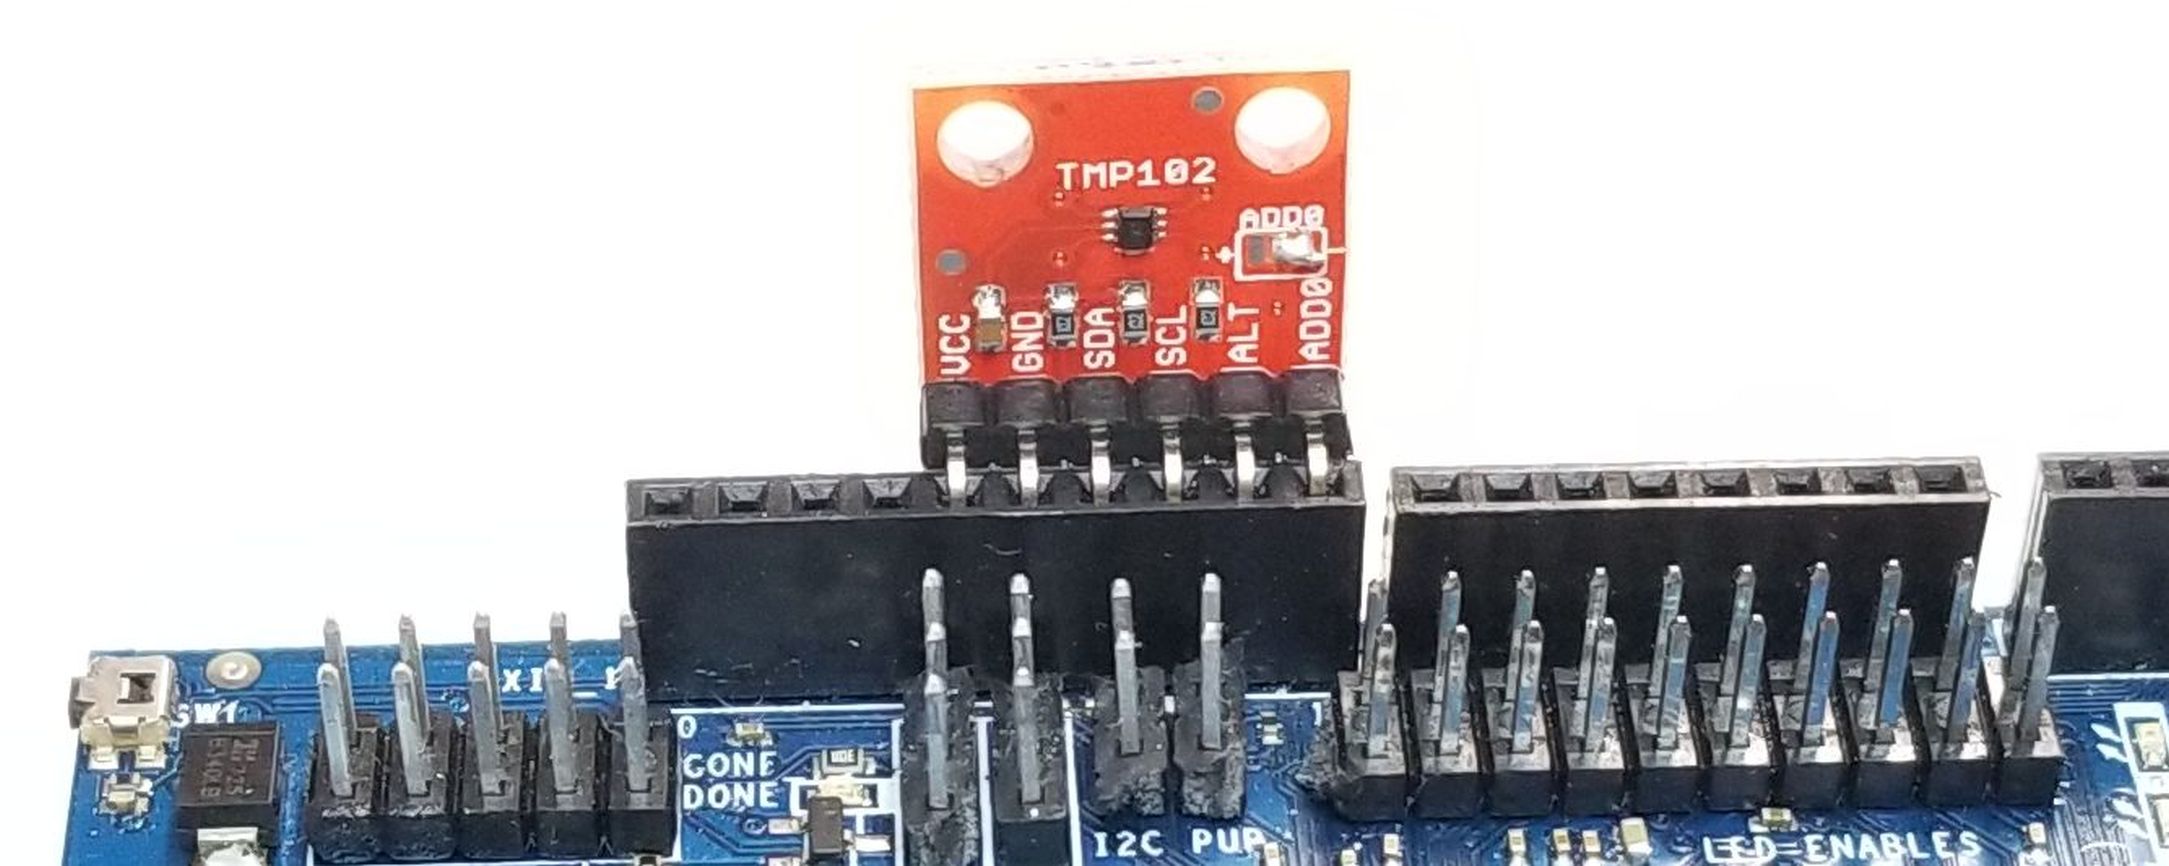 EPT-200TMP-TS-U2 with Arduino